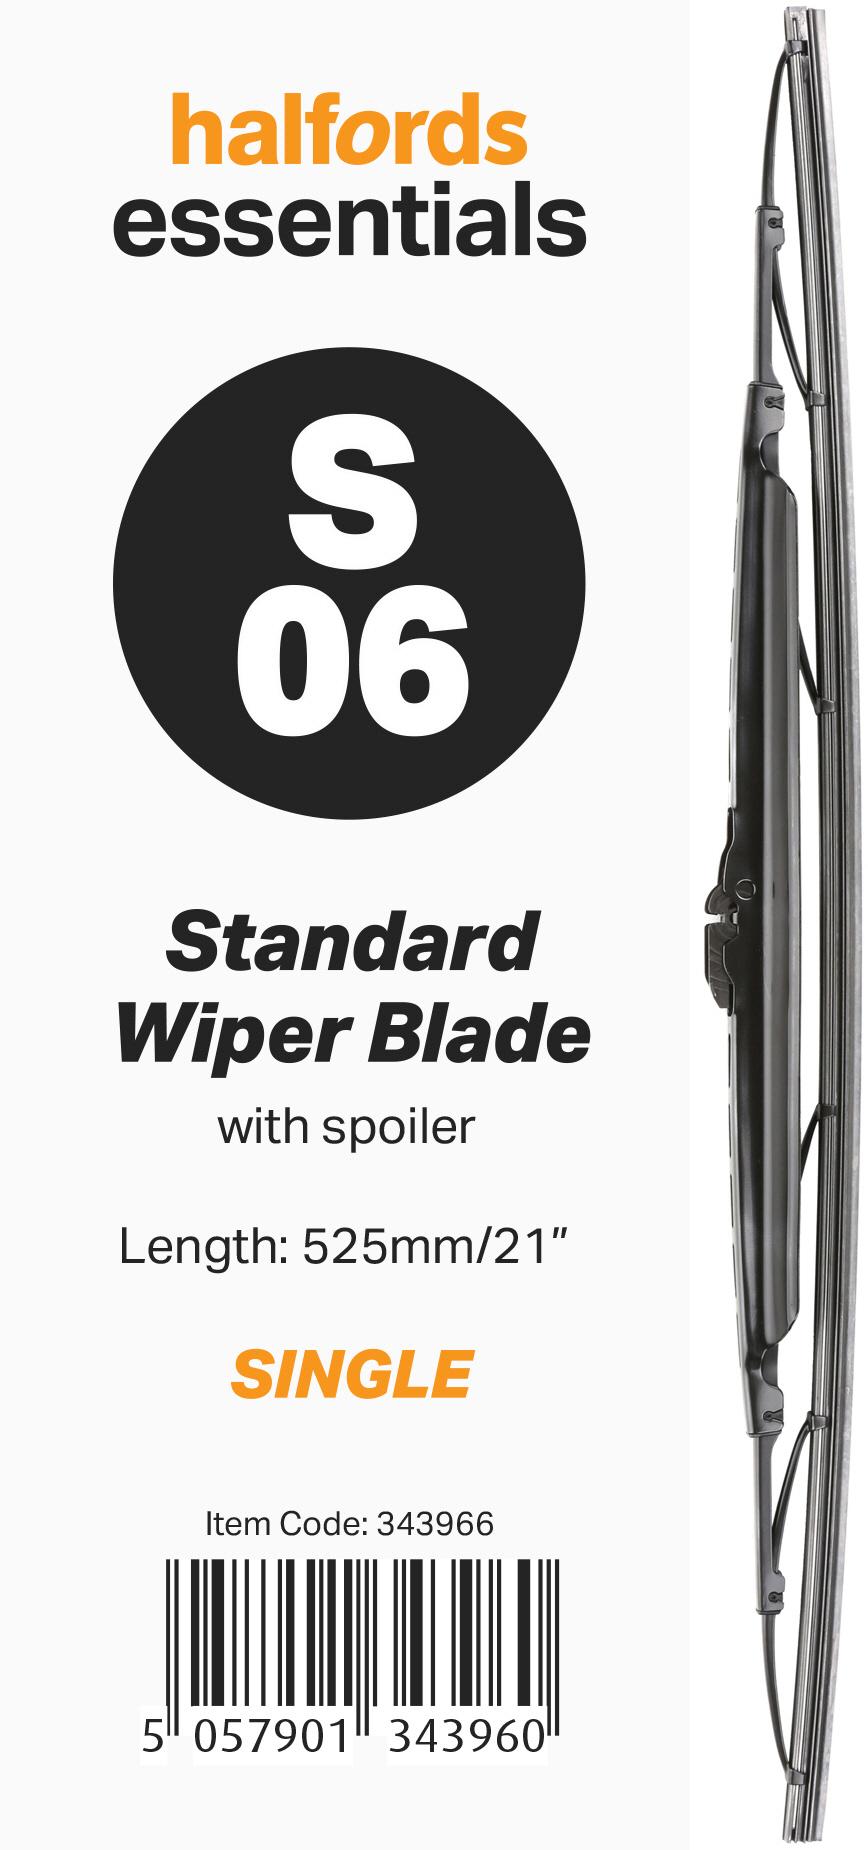 Halfords Essentials Spoiler Wiper Blade S06 - 21 Inch